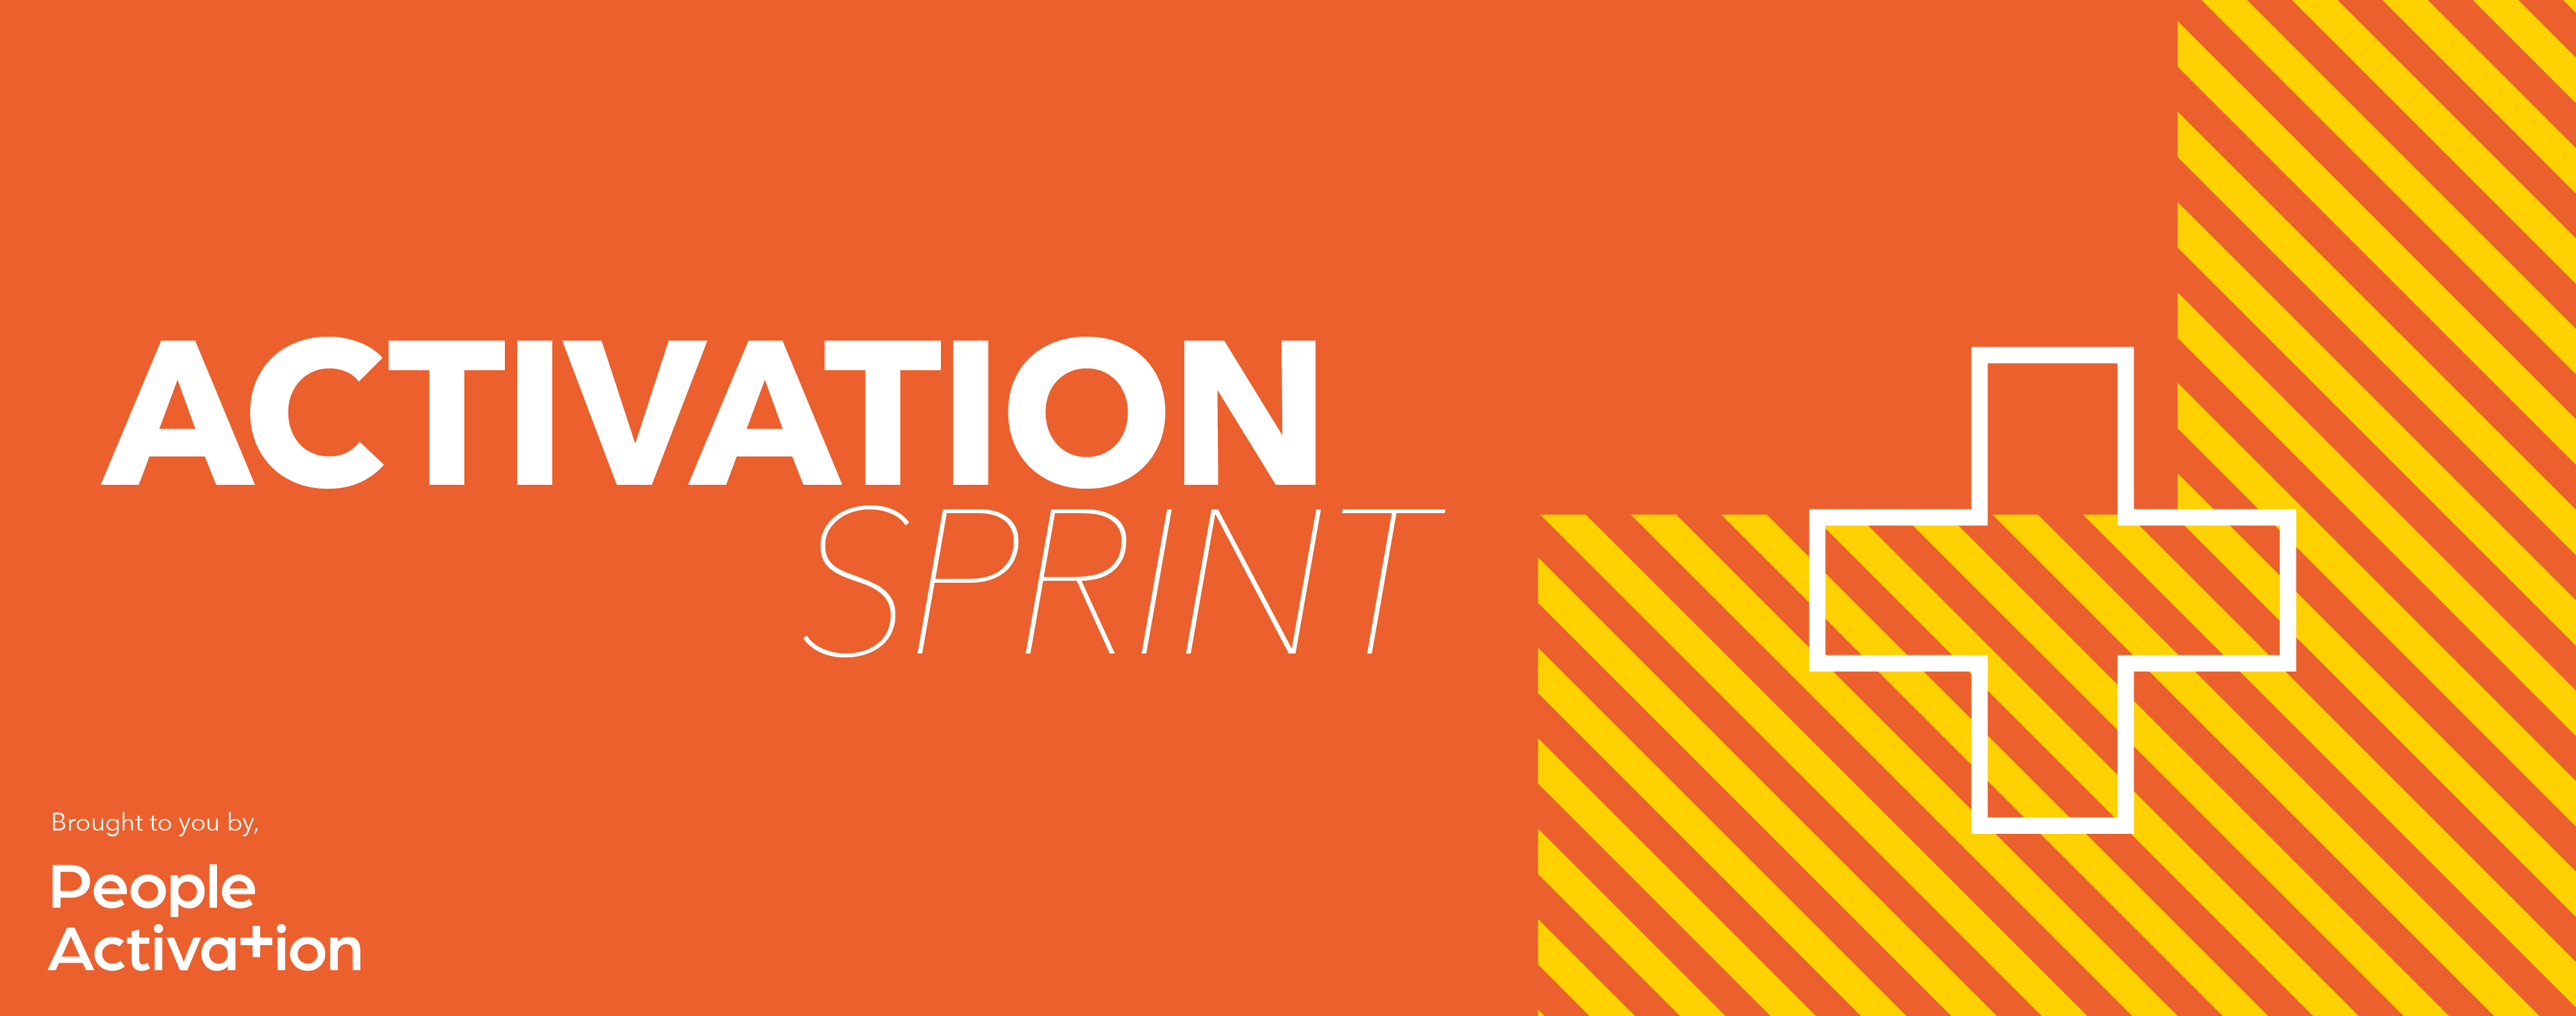 Activation Sprints-02